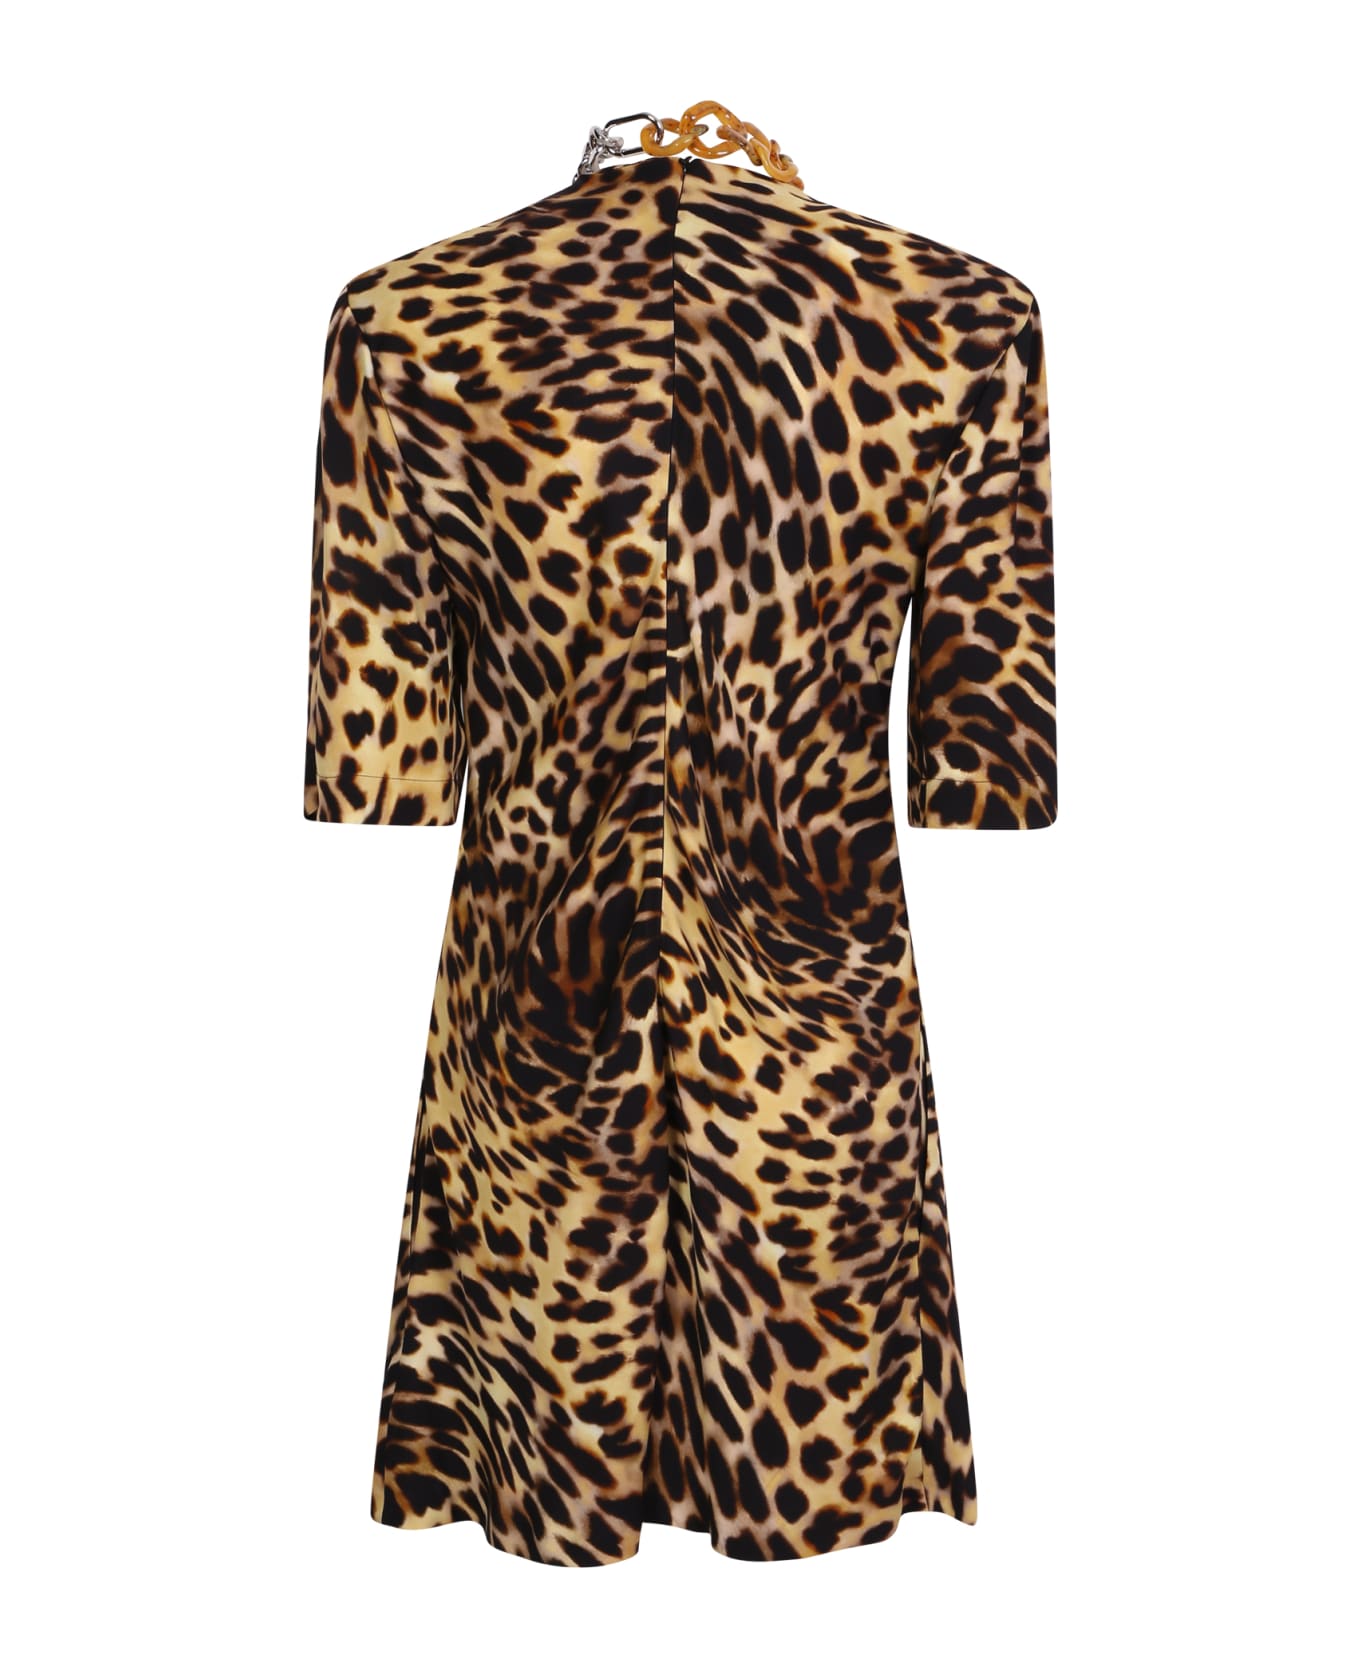 Stella McCartney Leopard Print Dress - Pink